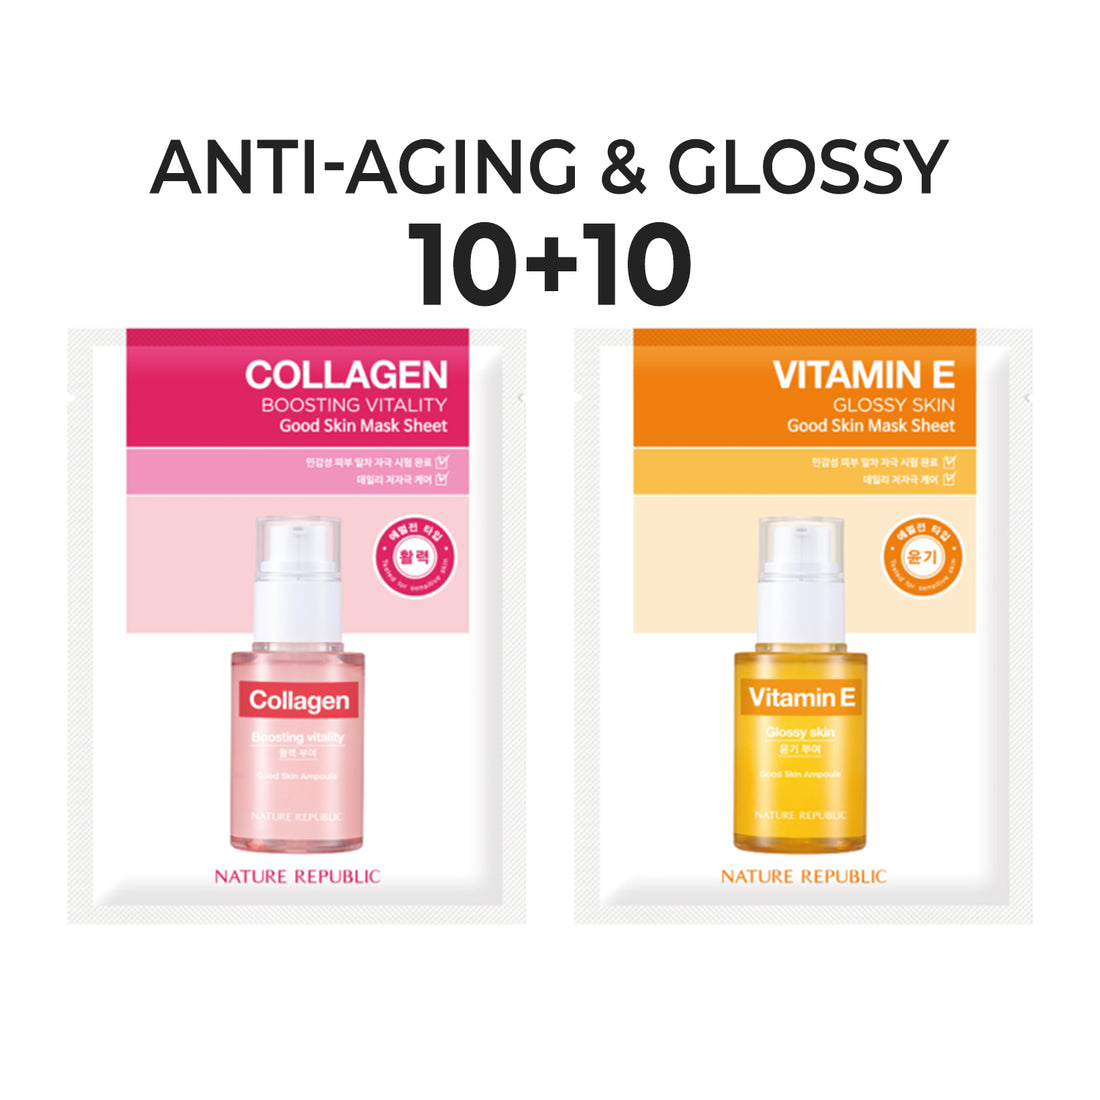 [10+10] Good Skin Anti-Aging & Glossy Mask Sheets (Collagen 10 + Vitamin E 10)